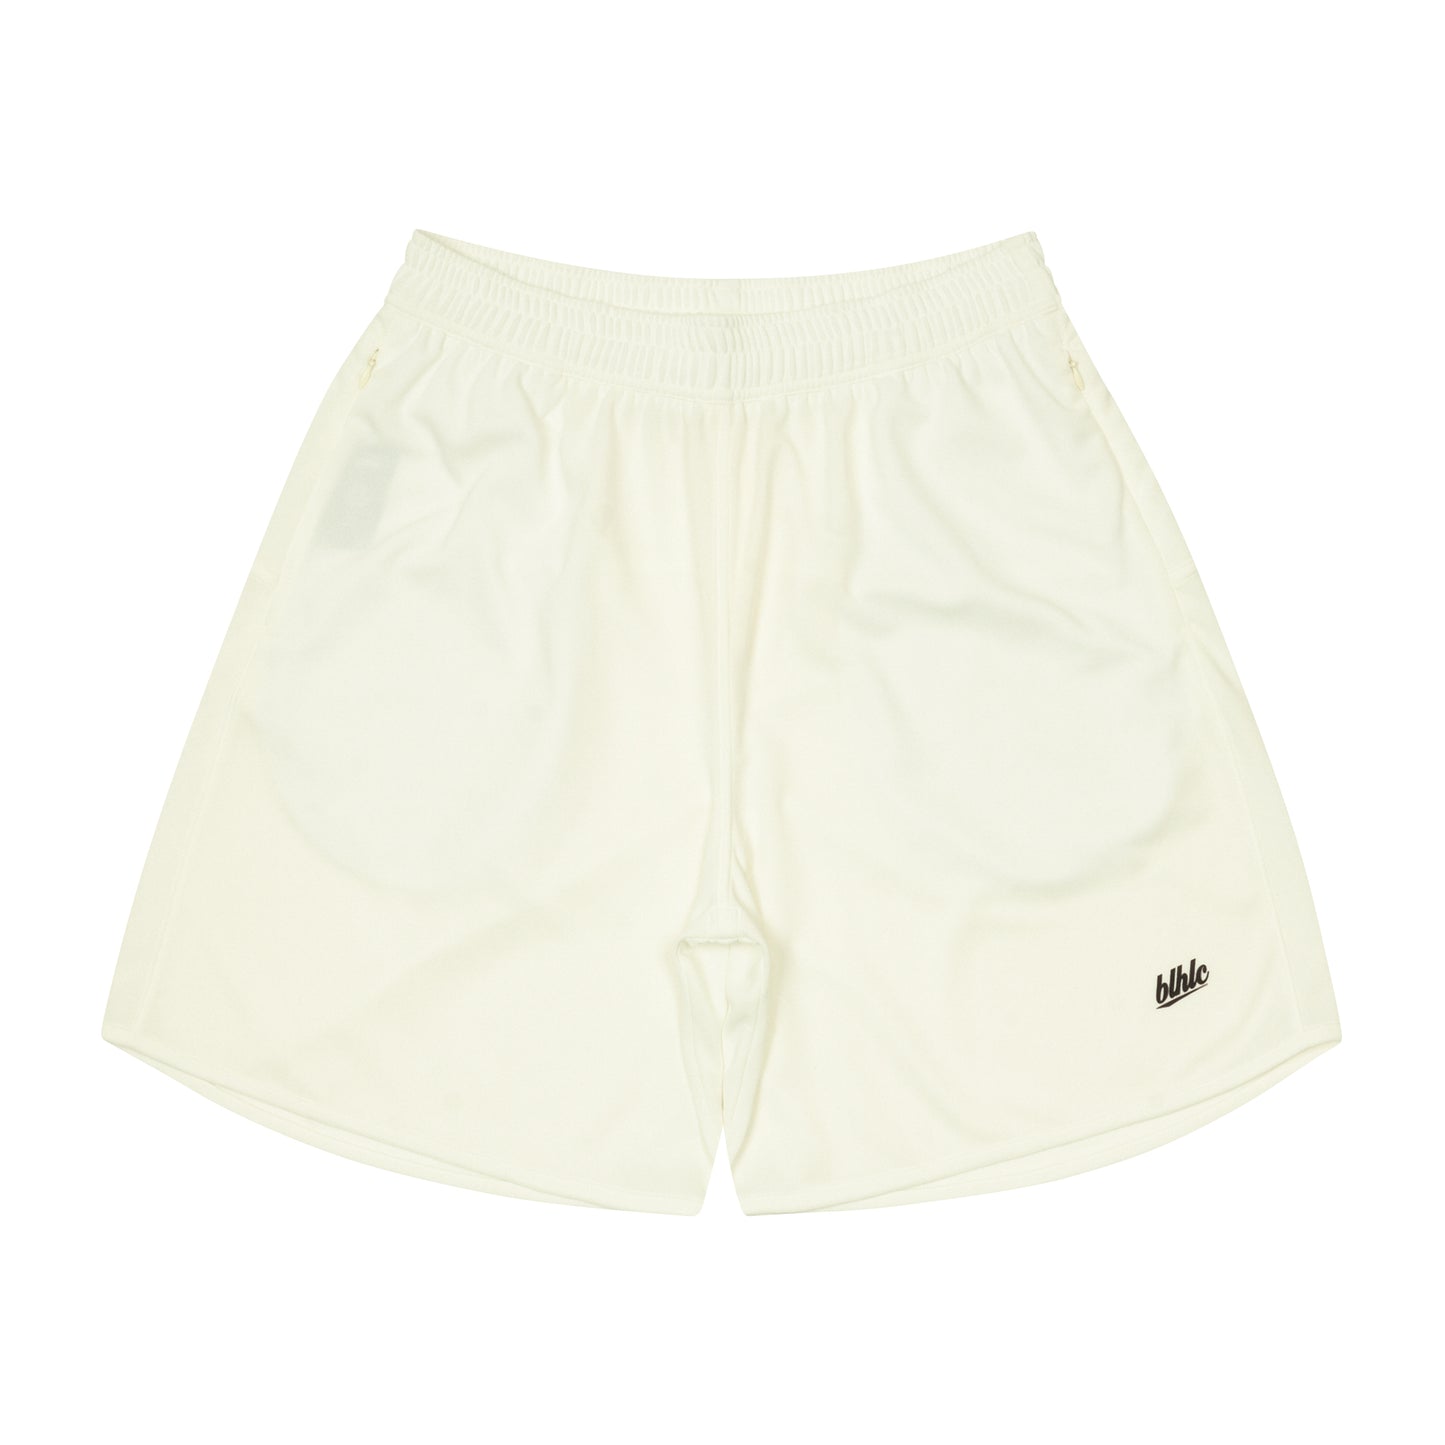 Basic Zip Shorts (off white/black)